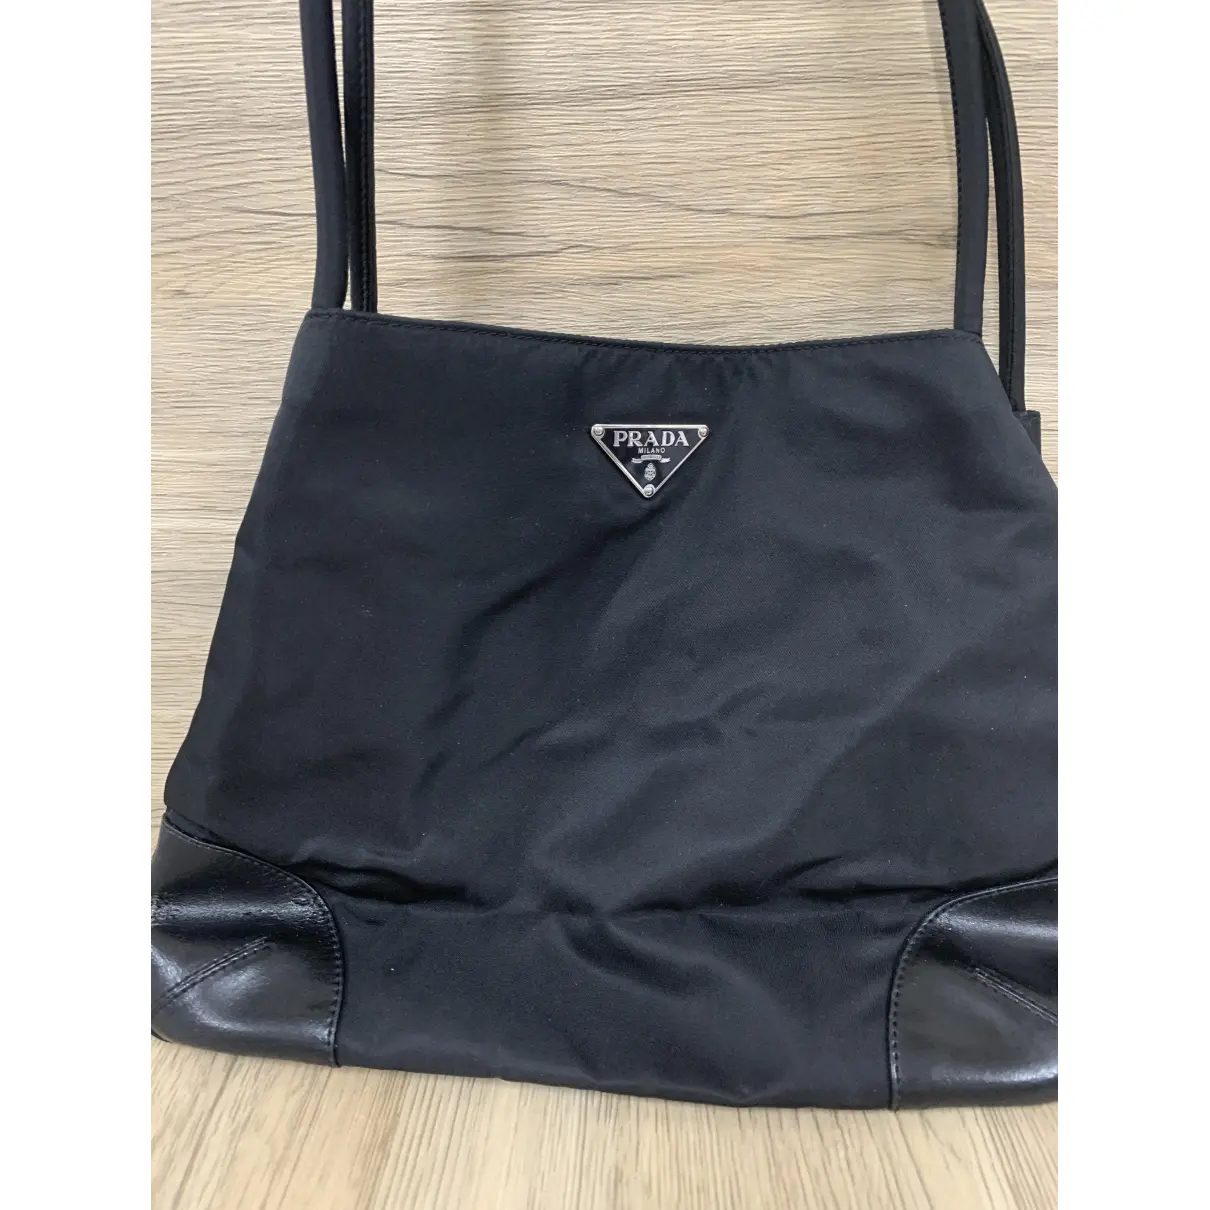 Buy Prada Re-Nylon handbag online